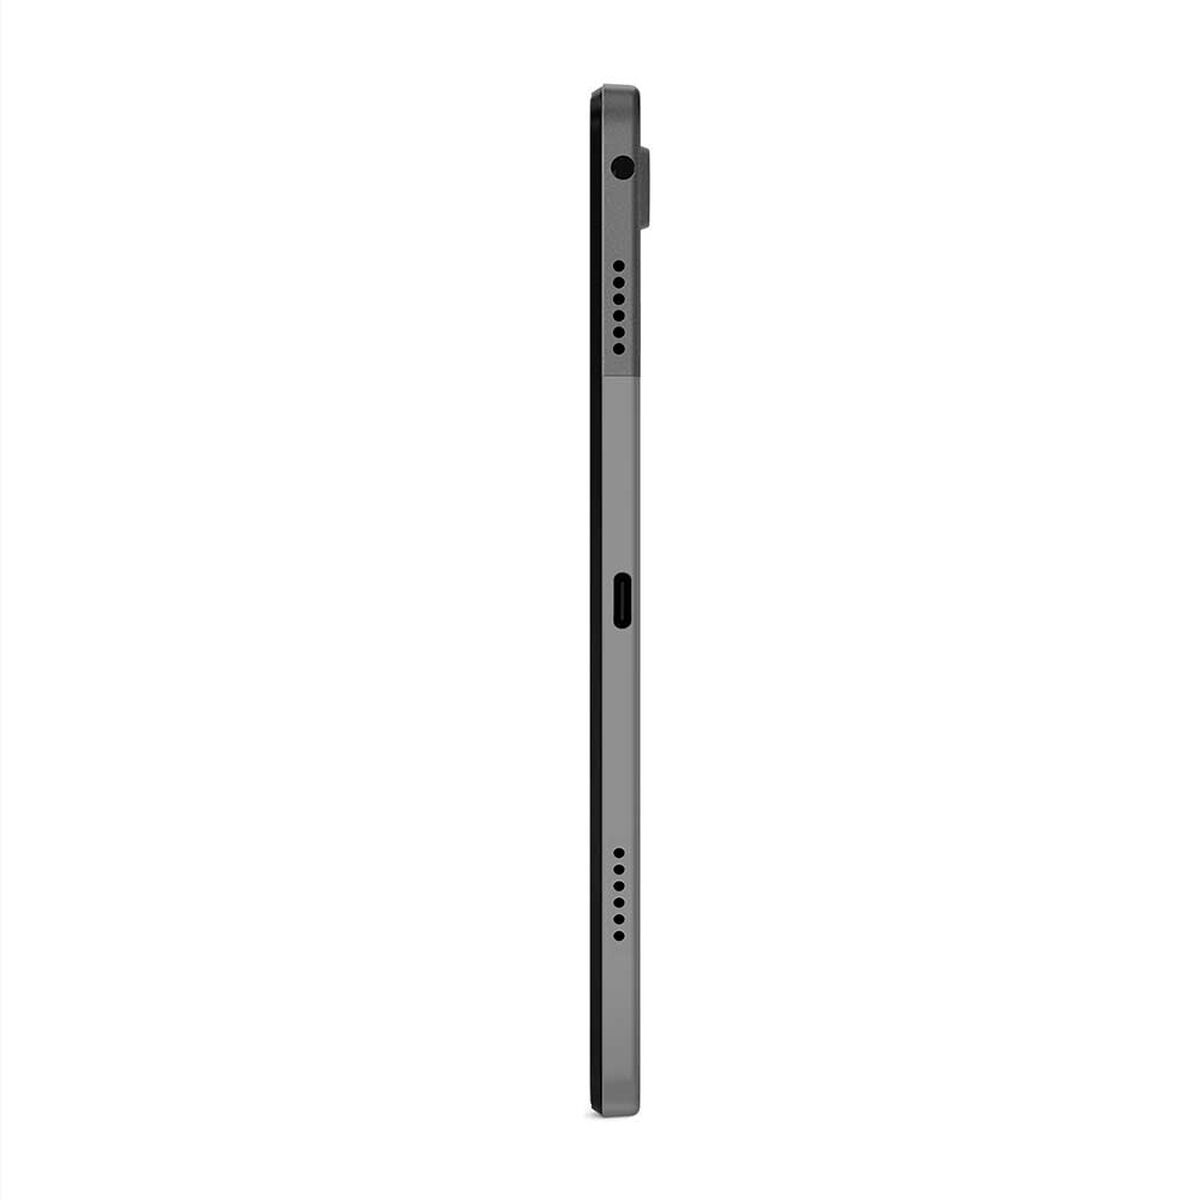 Tablet Lenovo M10 Plus MediaTek Helio G80 4GB 128GB 10,6" 2K Storm Grey + Lápiz + Funda